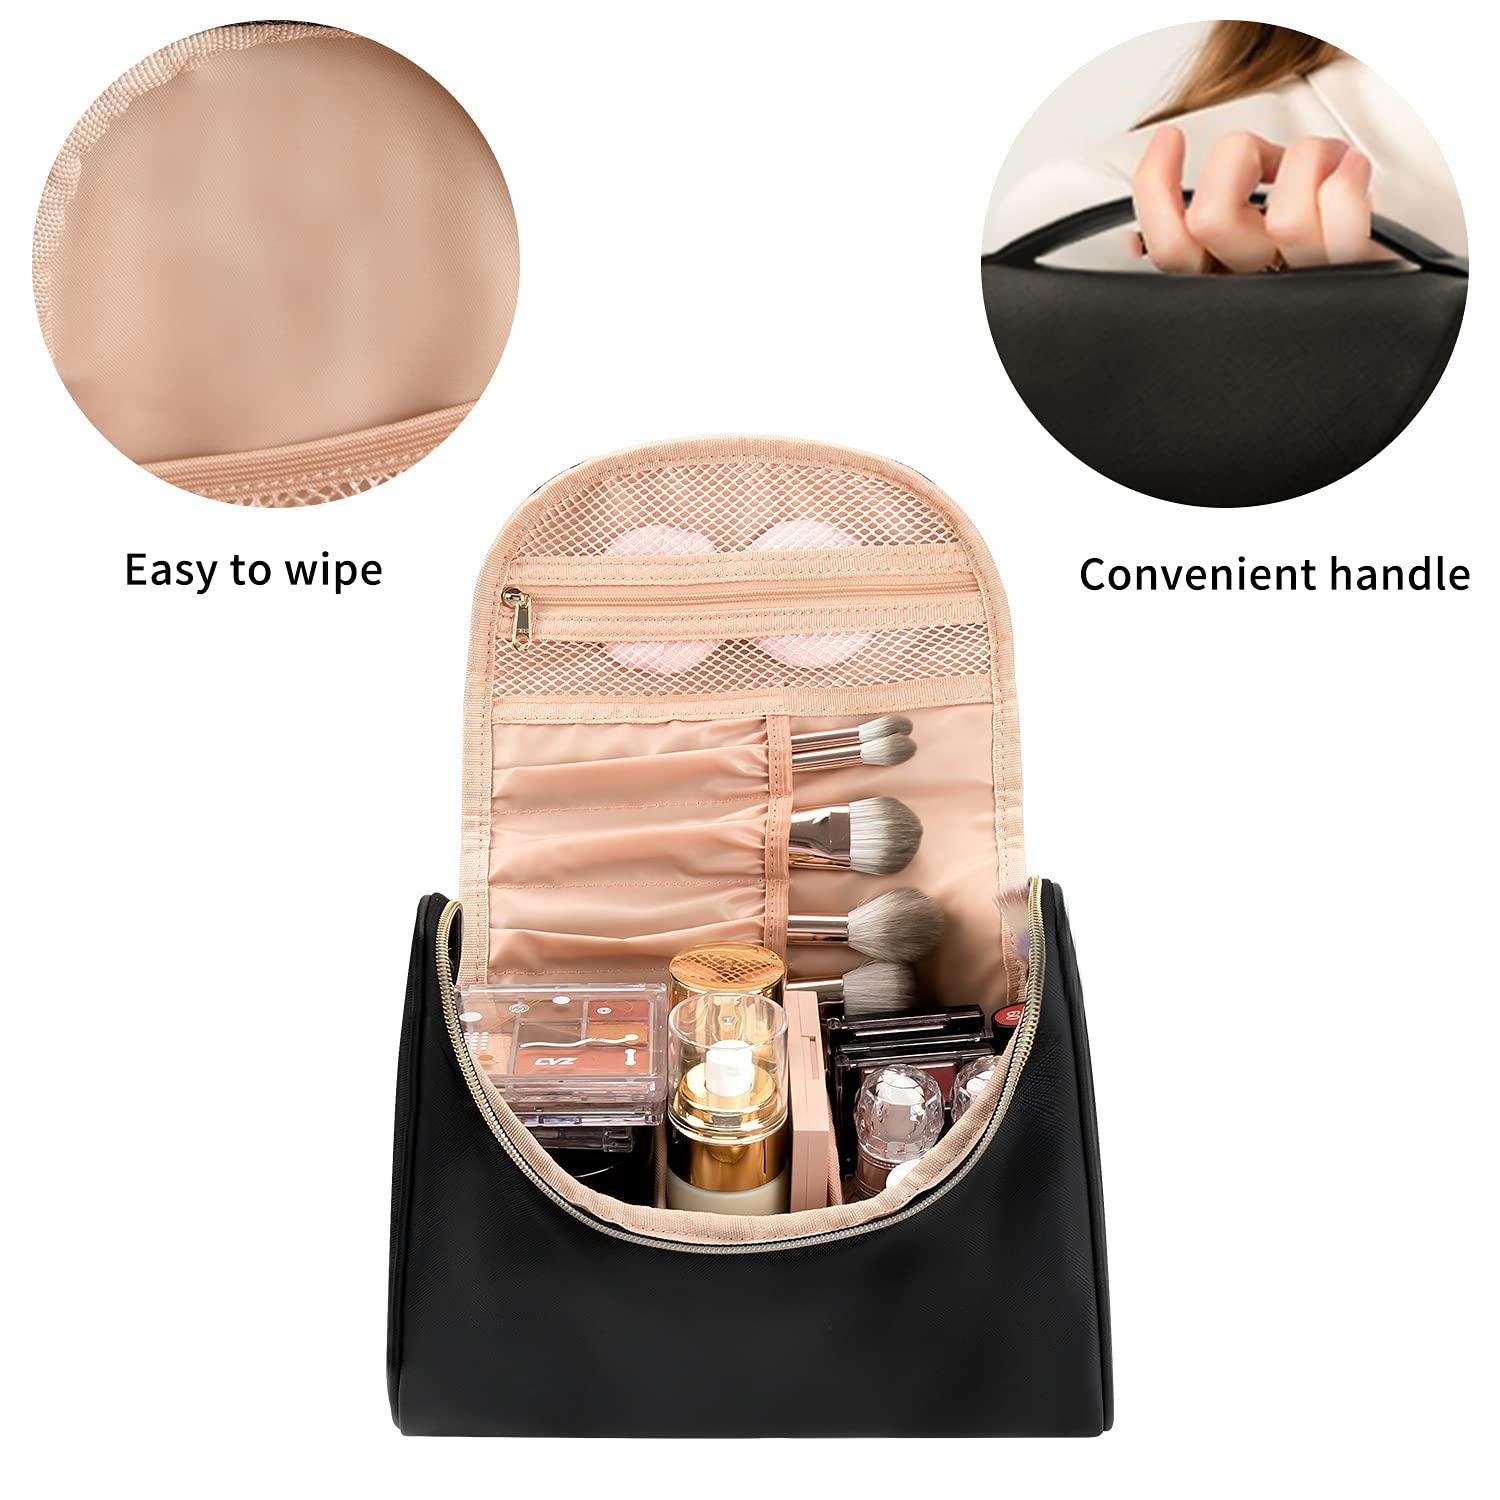 Portable Travel Cosmetic Bag, Makeup Brush Storage Bag, Women's